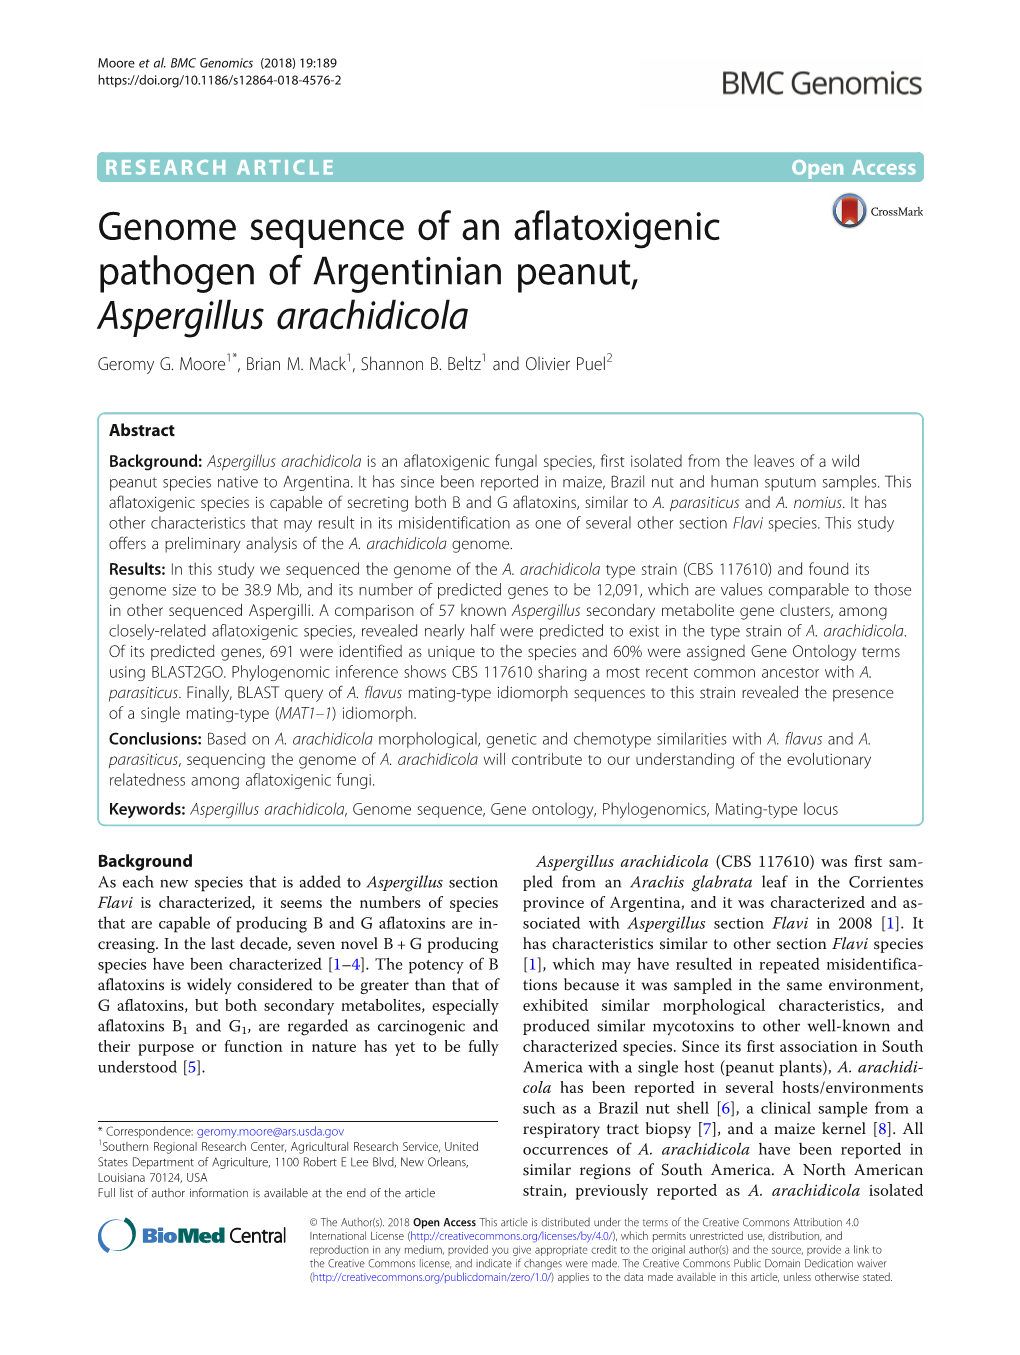 Genome Sequence of an Aflatoxigenic Pathogen of Argentinian Peanut, Aspergillus Arachidicola Geromy G